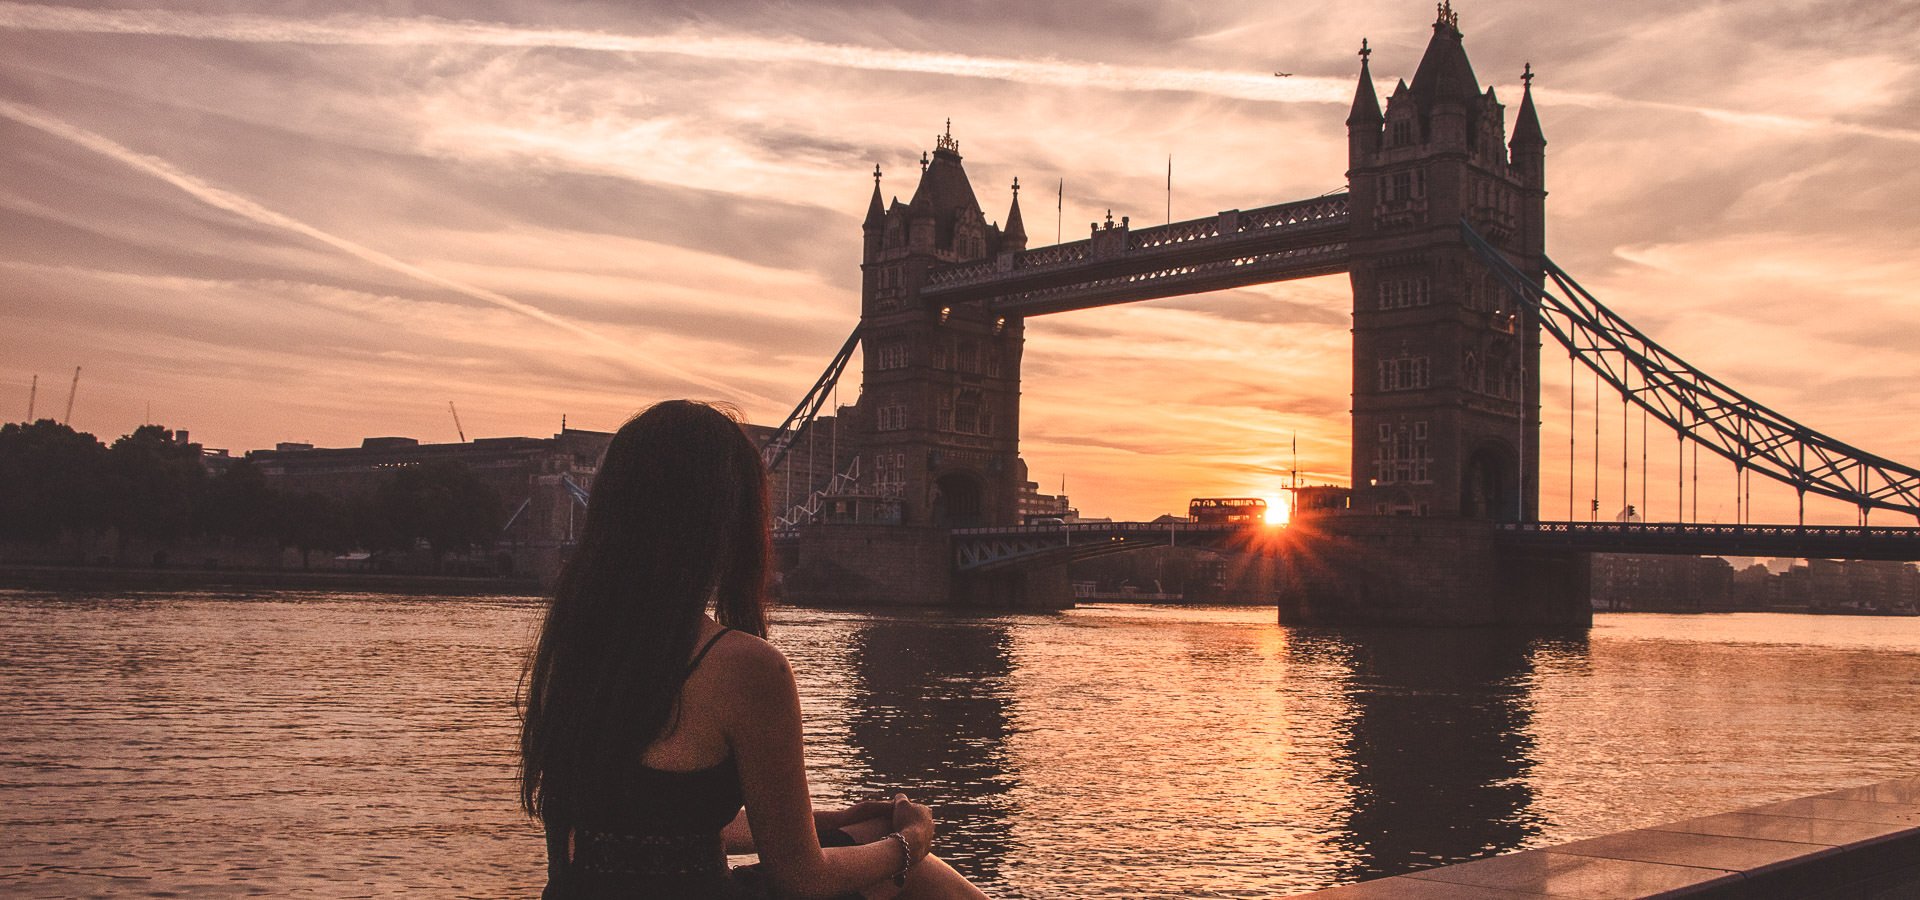 Sunrise at Tower Bridge | London Instagram Shots